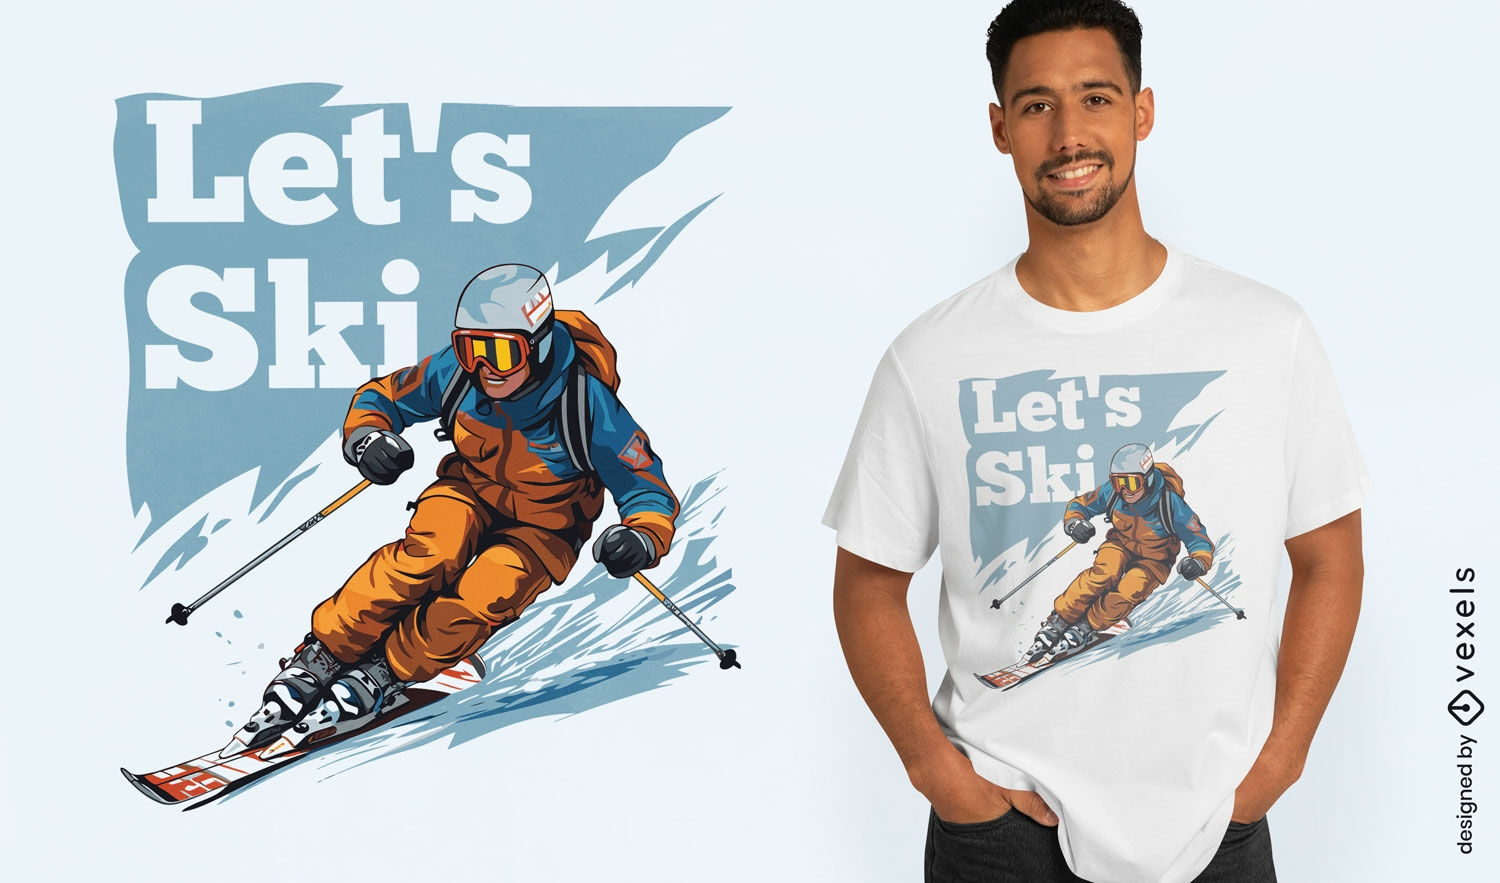 Diseño de camiseta vamos a esquiar.